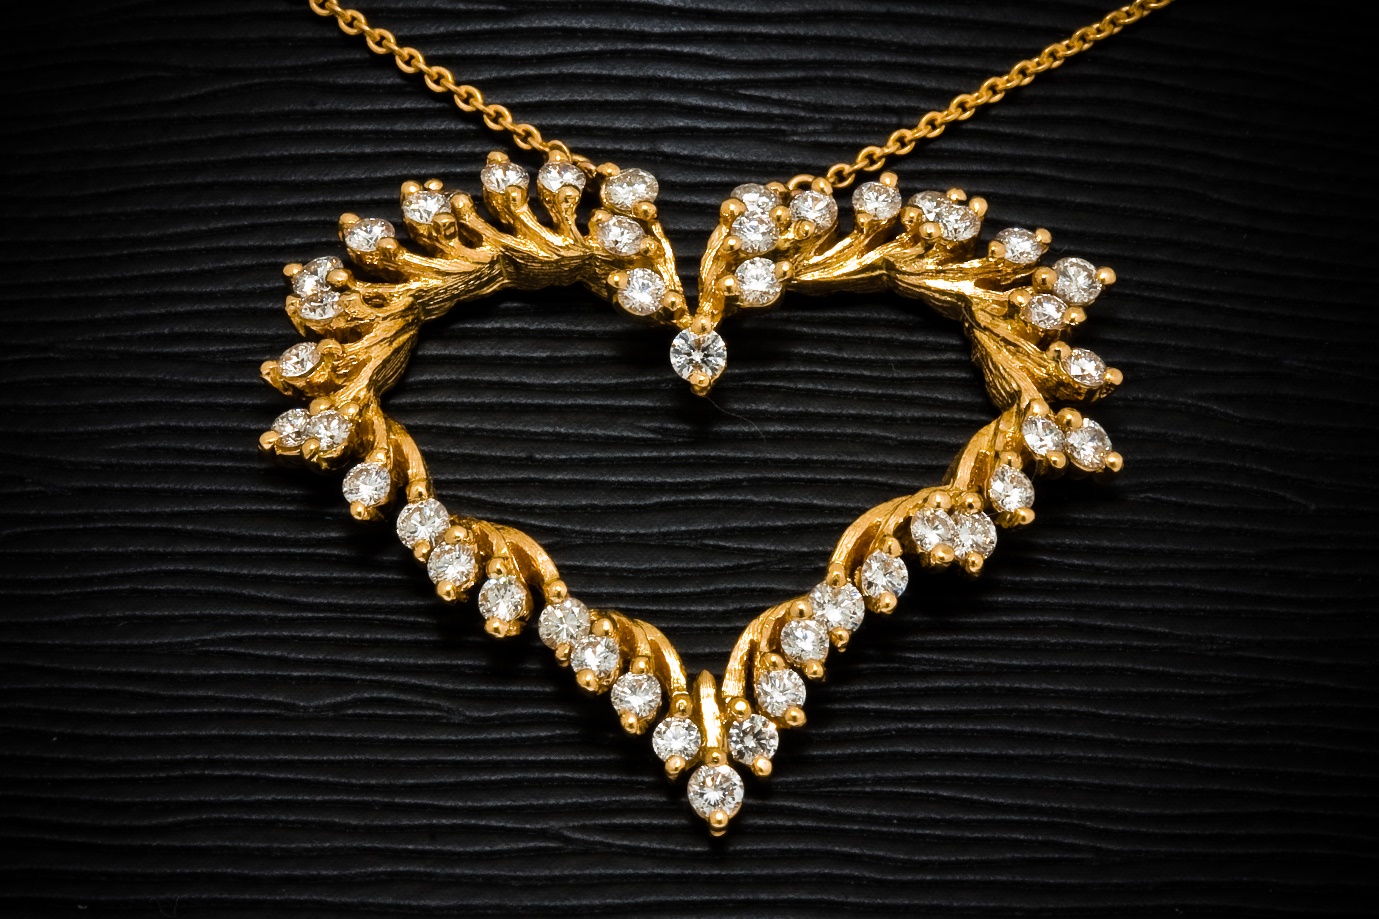 https://upload.wikimedia.org/wikipedia/commons/d/da/Gold-jewellery-jewel-henry-designs-terabass.jpg